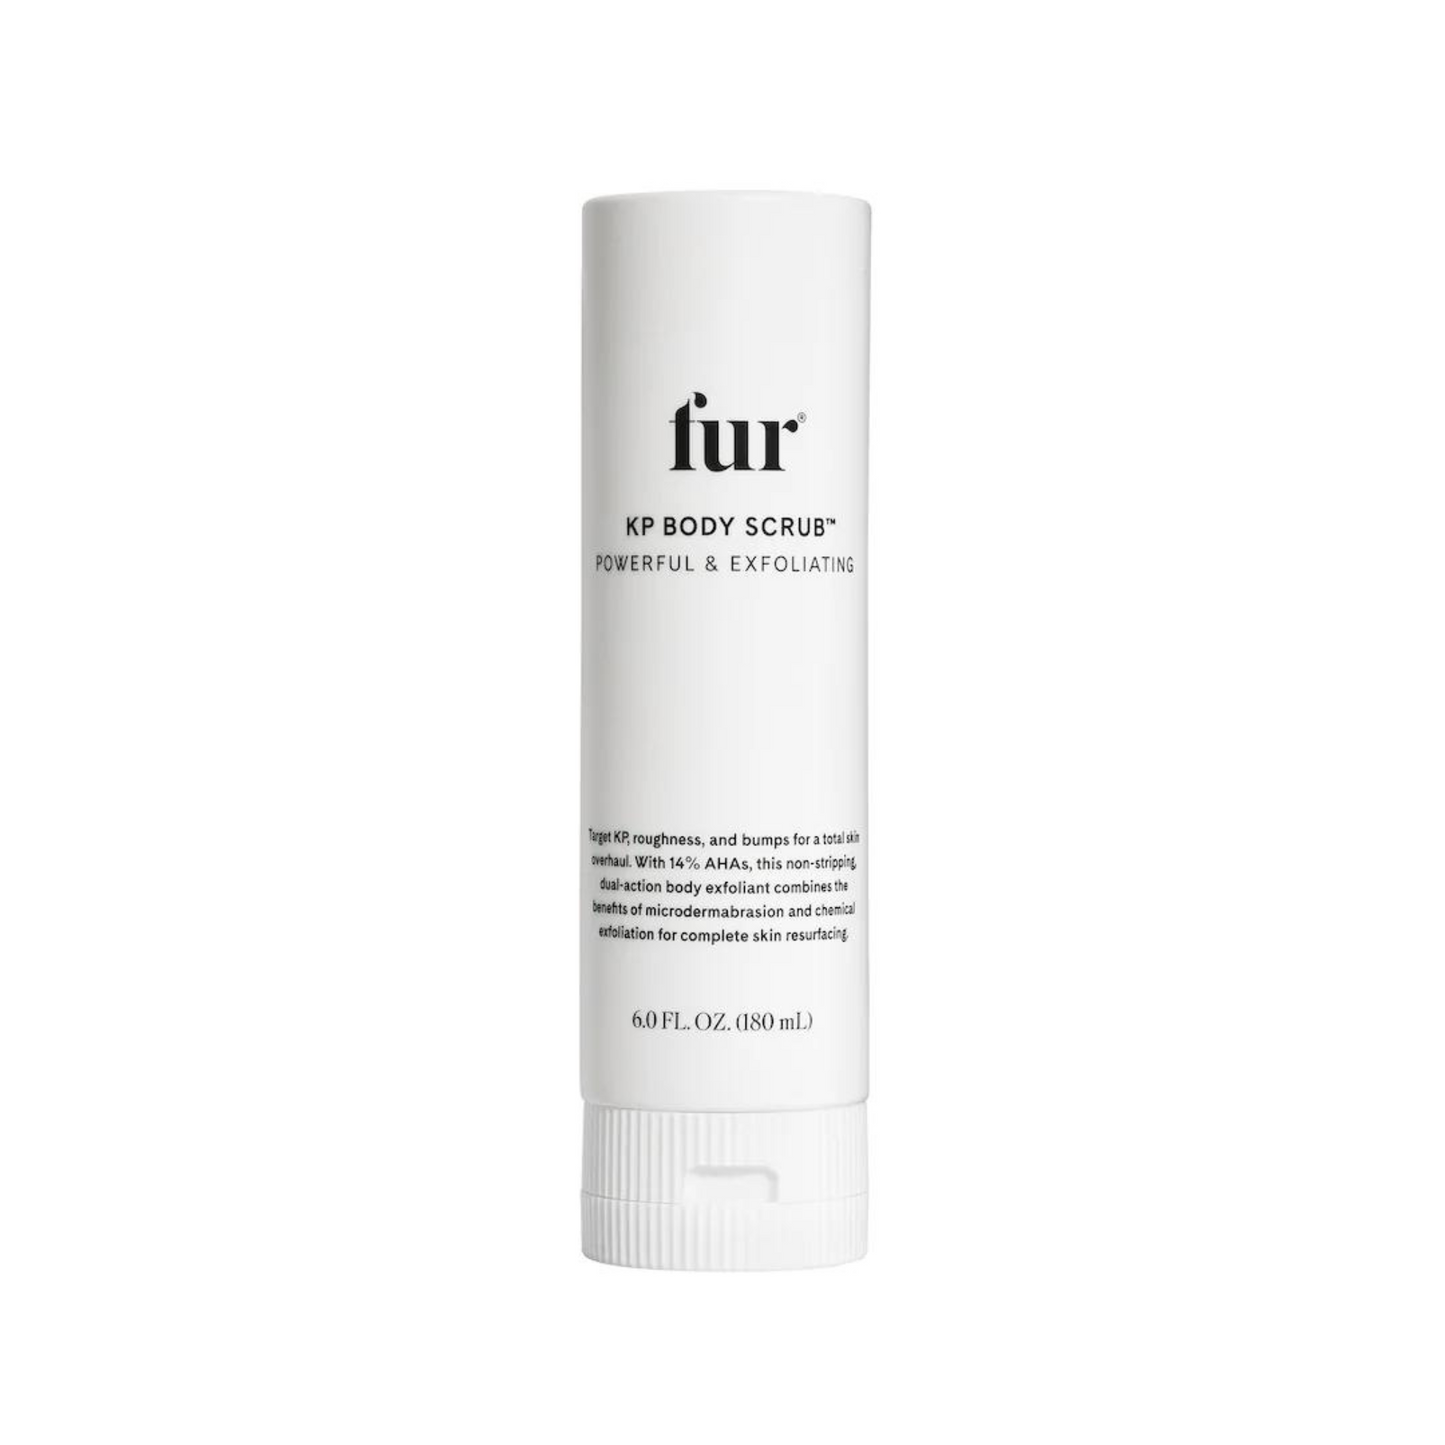 Primary Image of Fur KP Body Scrub (6.0 fl oz)